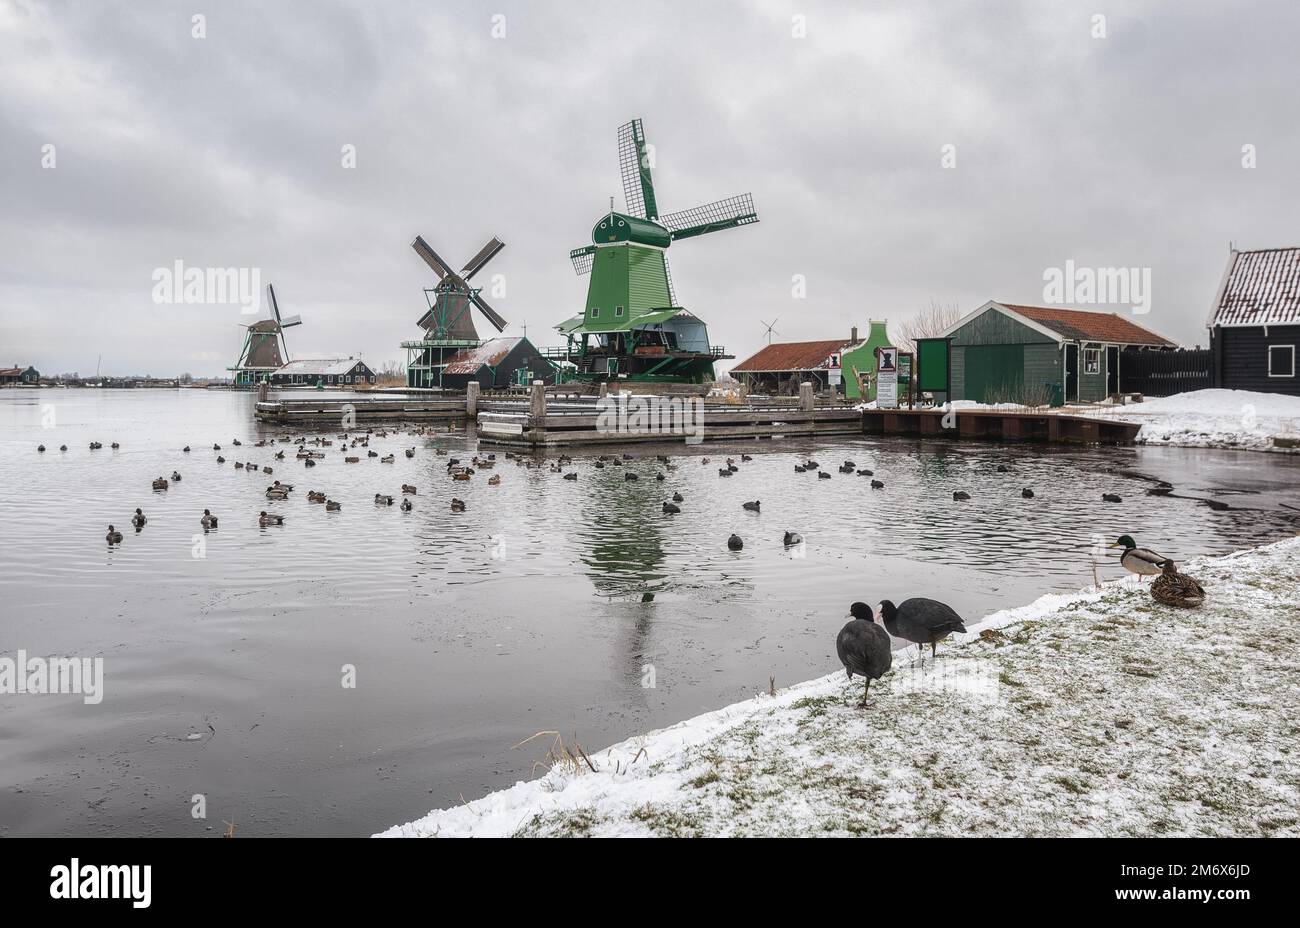 Lots of ducks on the river Zaan near the mills in the Zaans Schans, Netherlads. Stock Photo